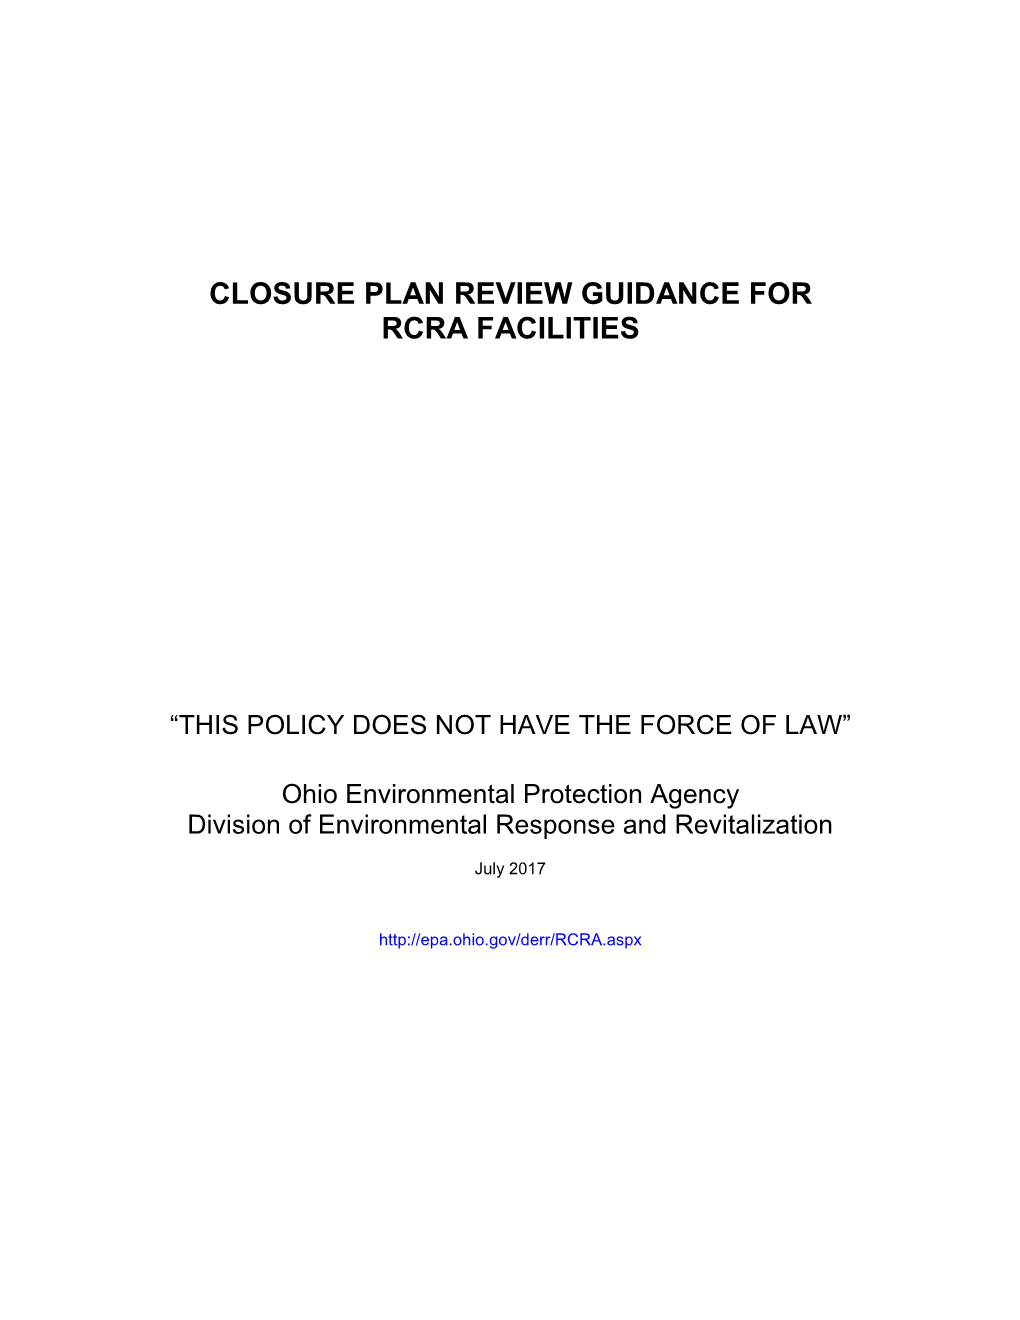 Closure Plan Review Guidance for Rcra Facilities